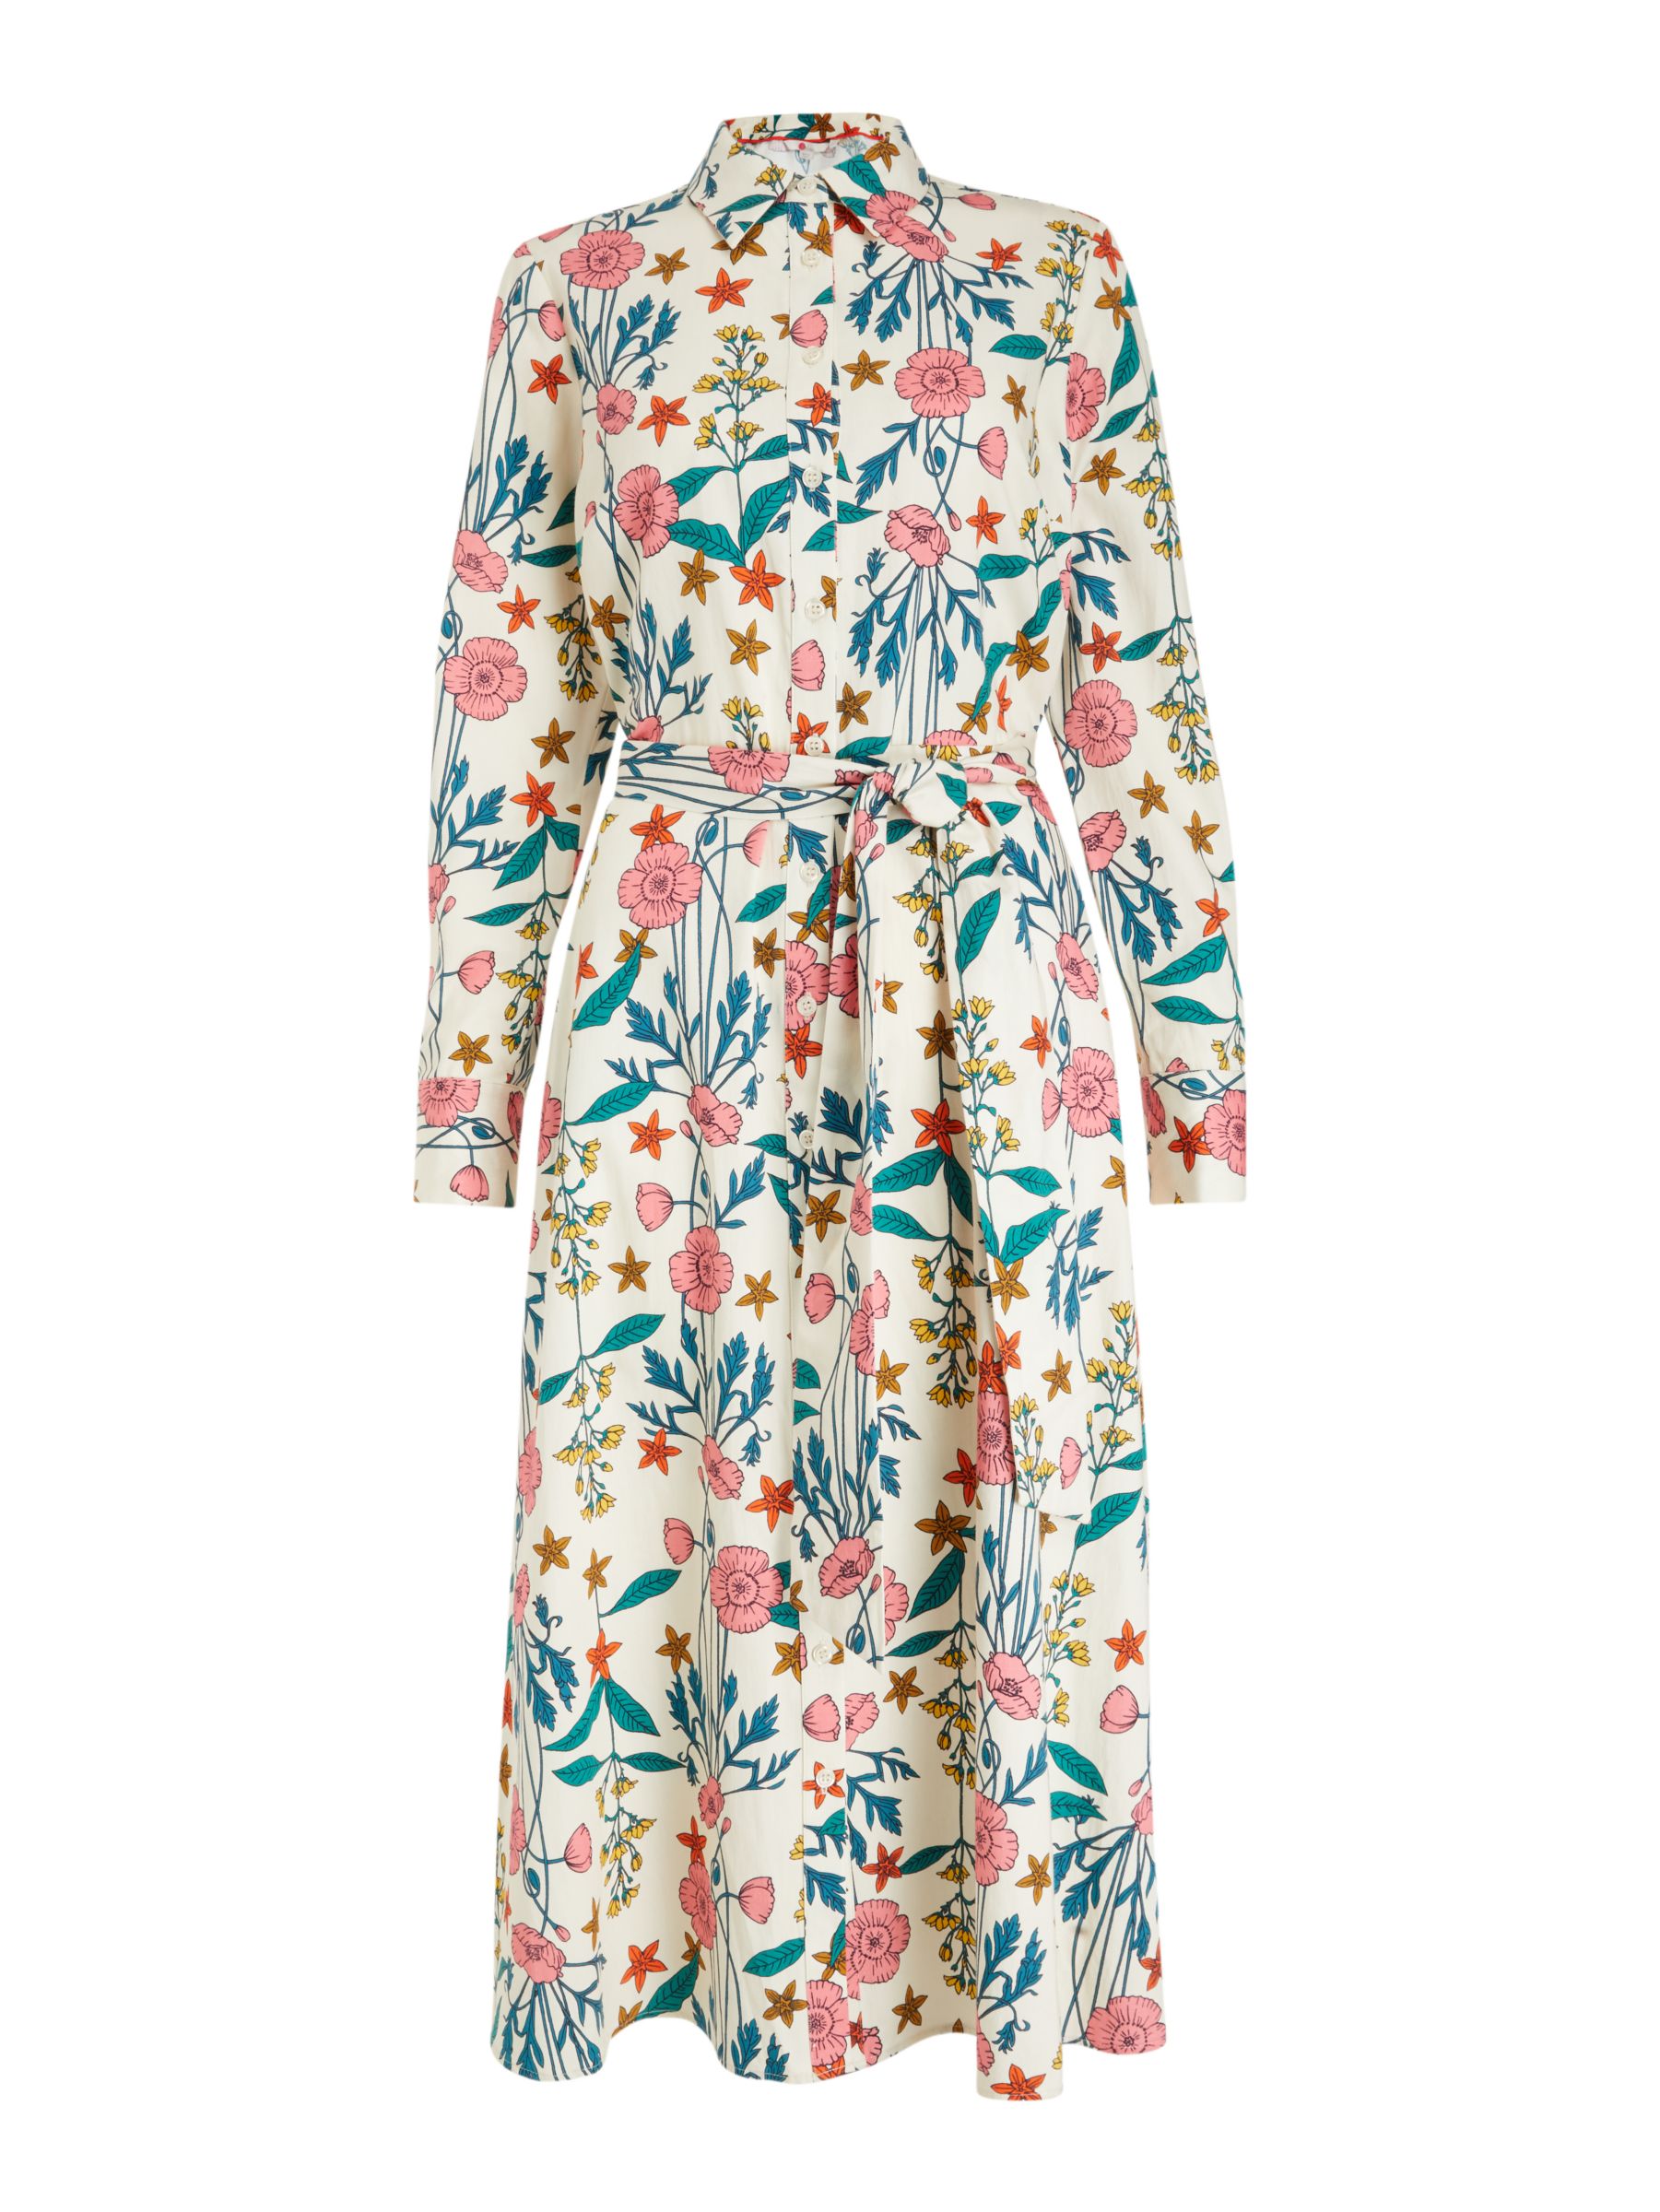 Boden Isadora Floral Shirt Dress, Ivory/Garden Charm, 8